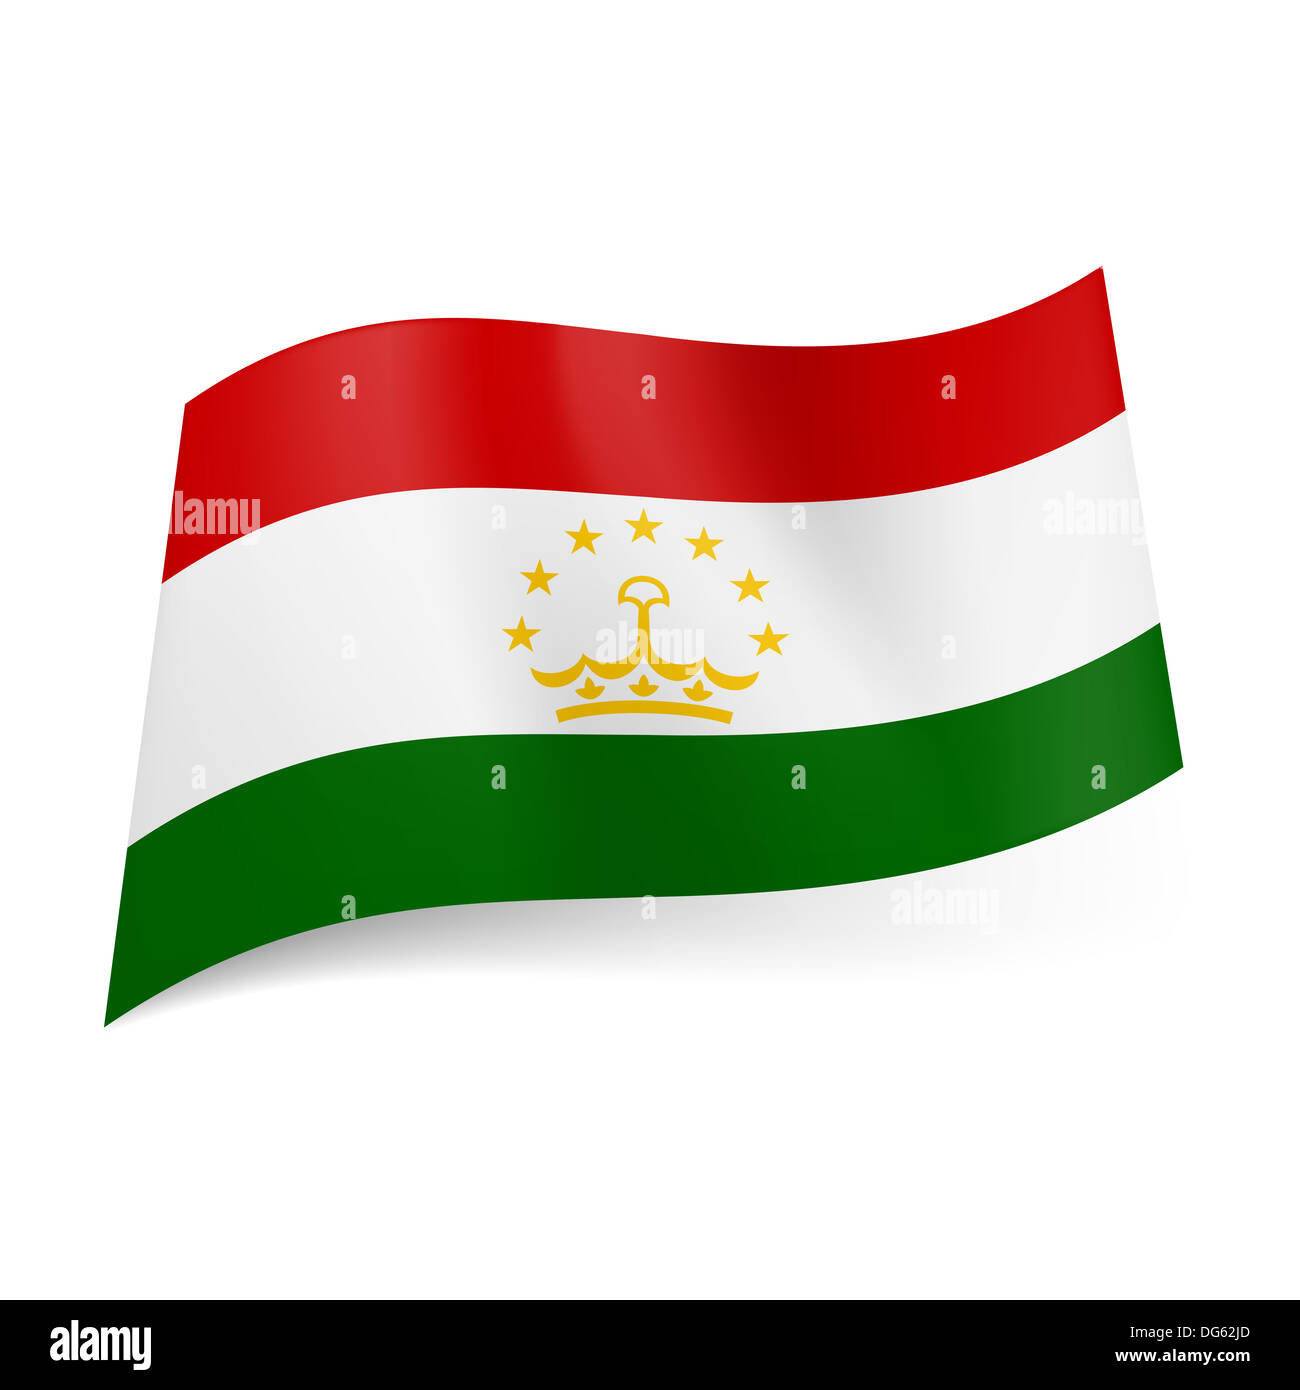 National flag of Tajikistan: red, white and green horizontal stripes